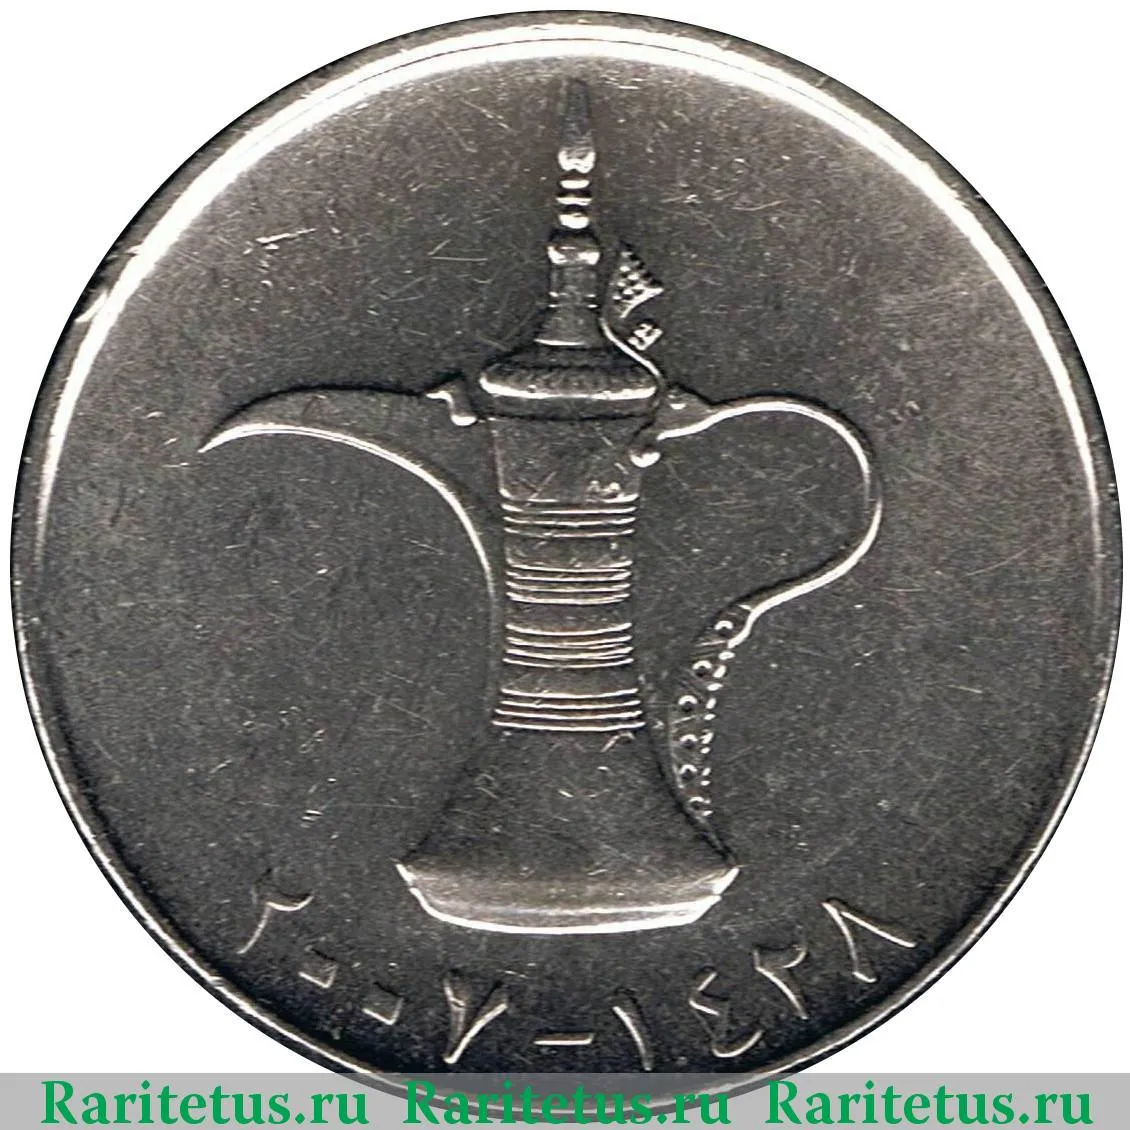 Дирхами к рублю. Монета United arab Emirates 2007 1428. Дирхам ОАЭ монеты. 1 Дирхам 2007 ОАЭ. Старинные арабские монеты.